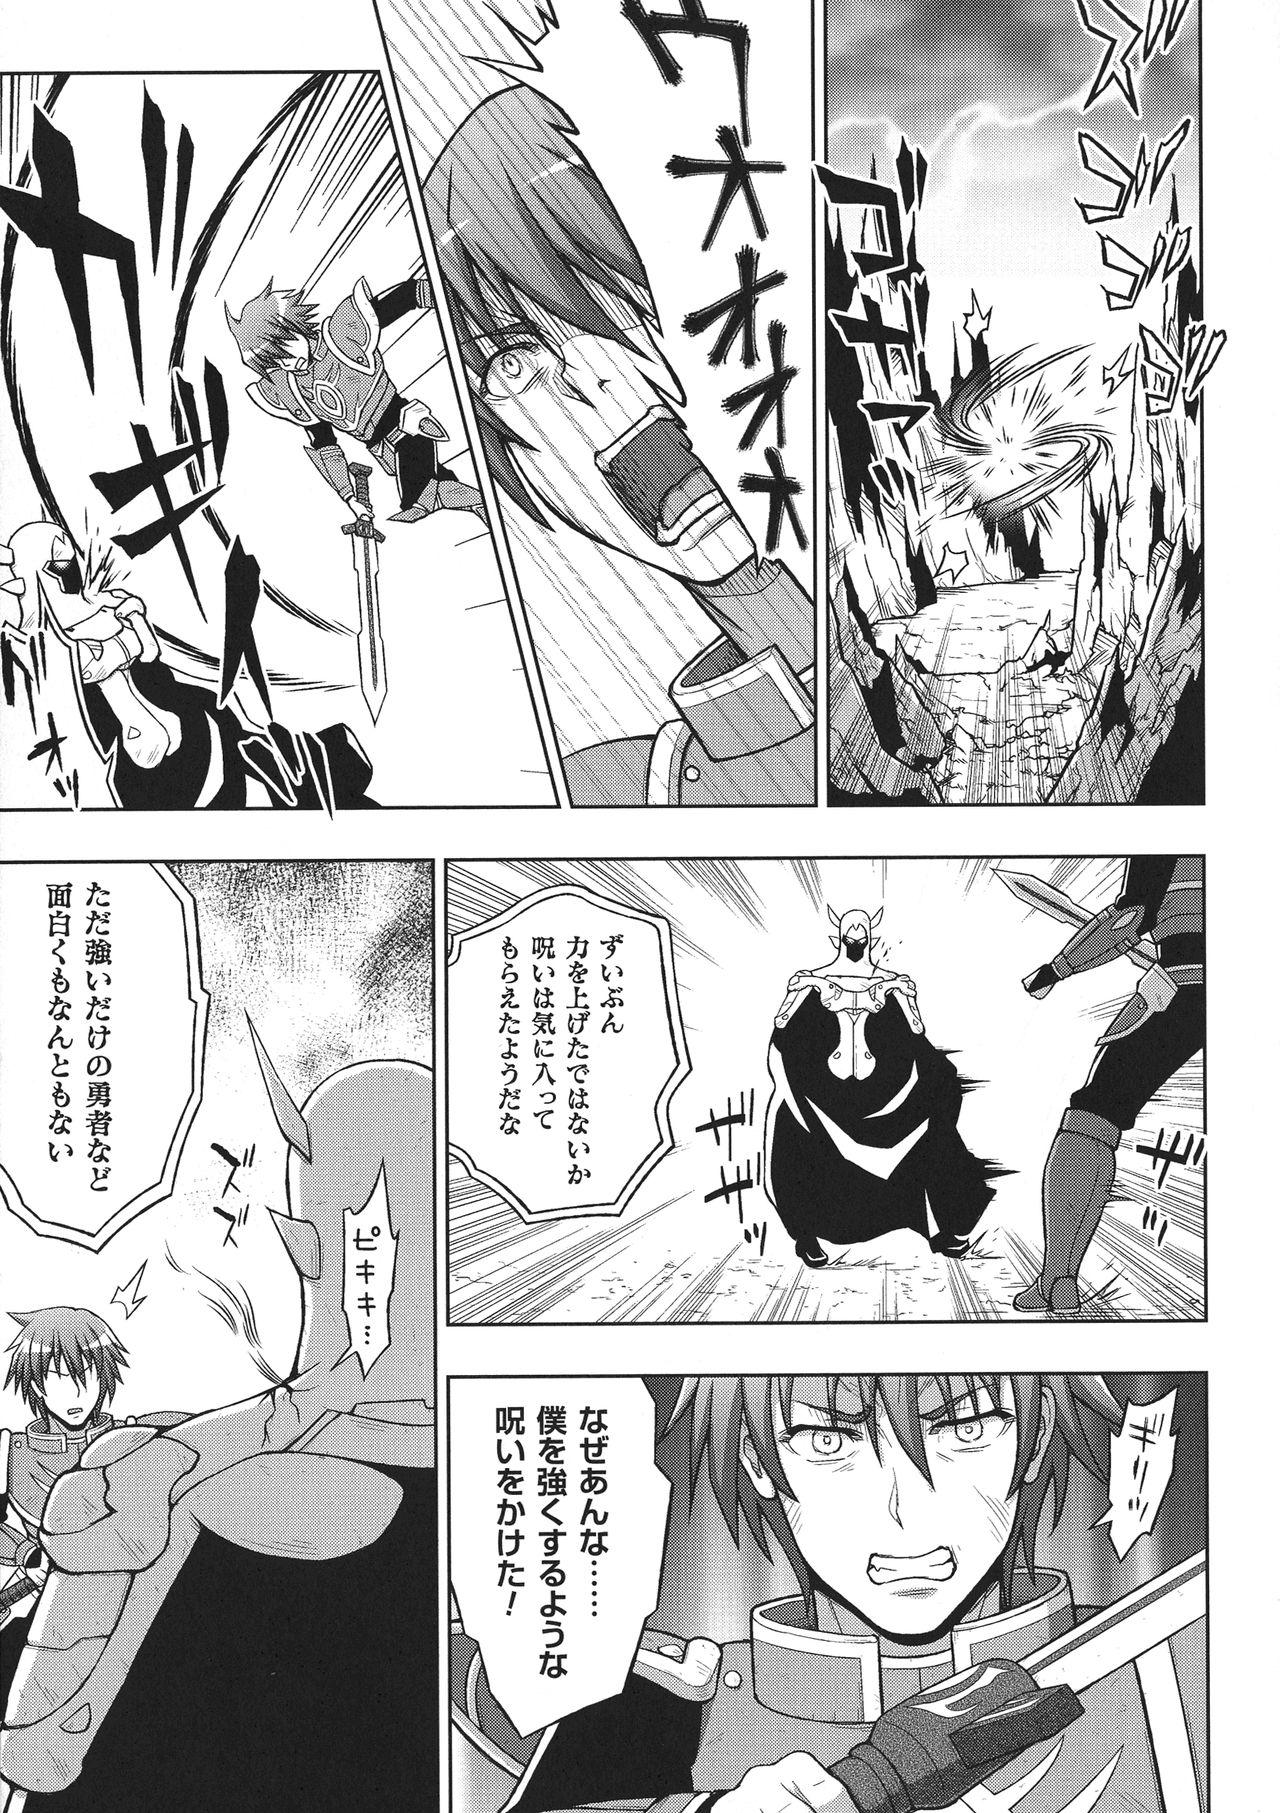 Seigi no Heroine Kangoku File DX Vol. 8 58